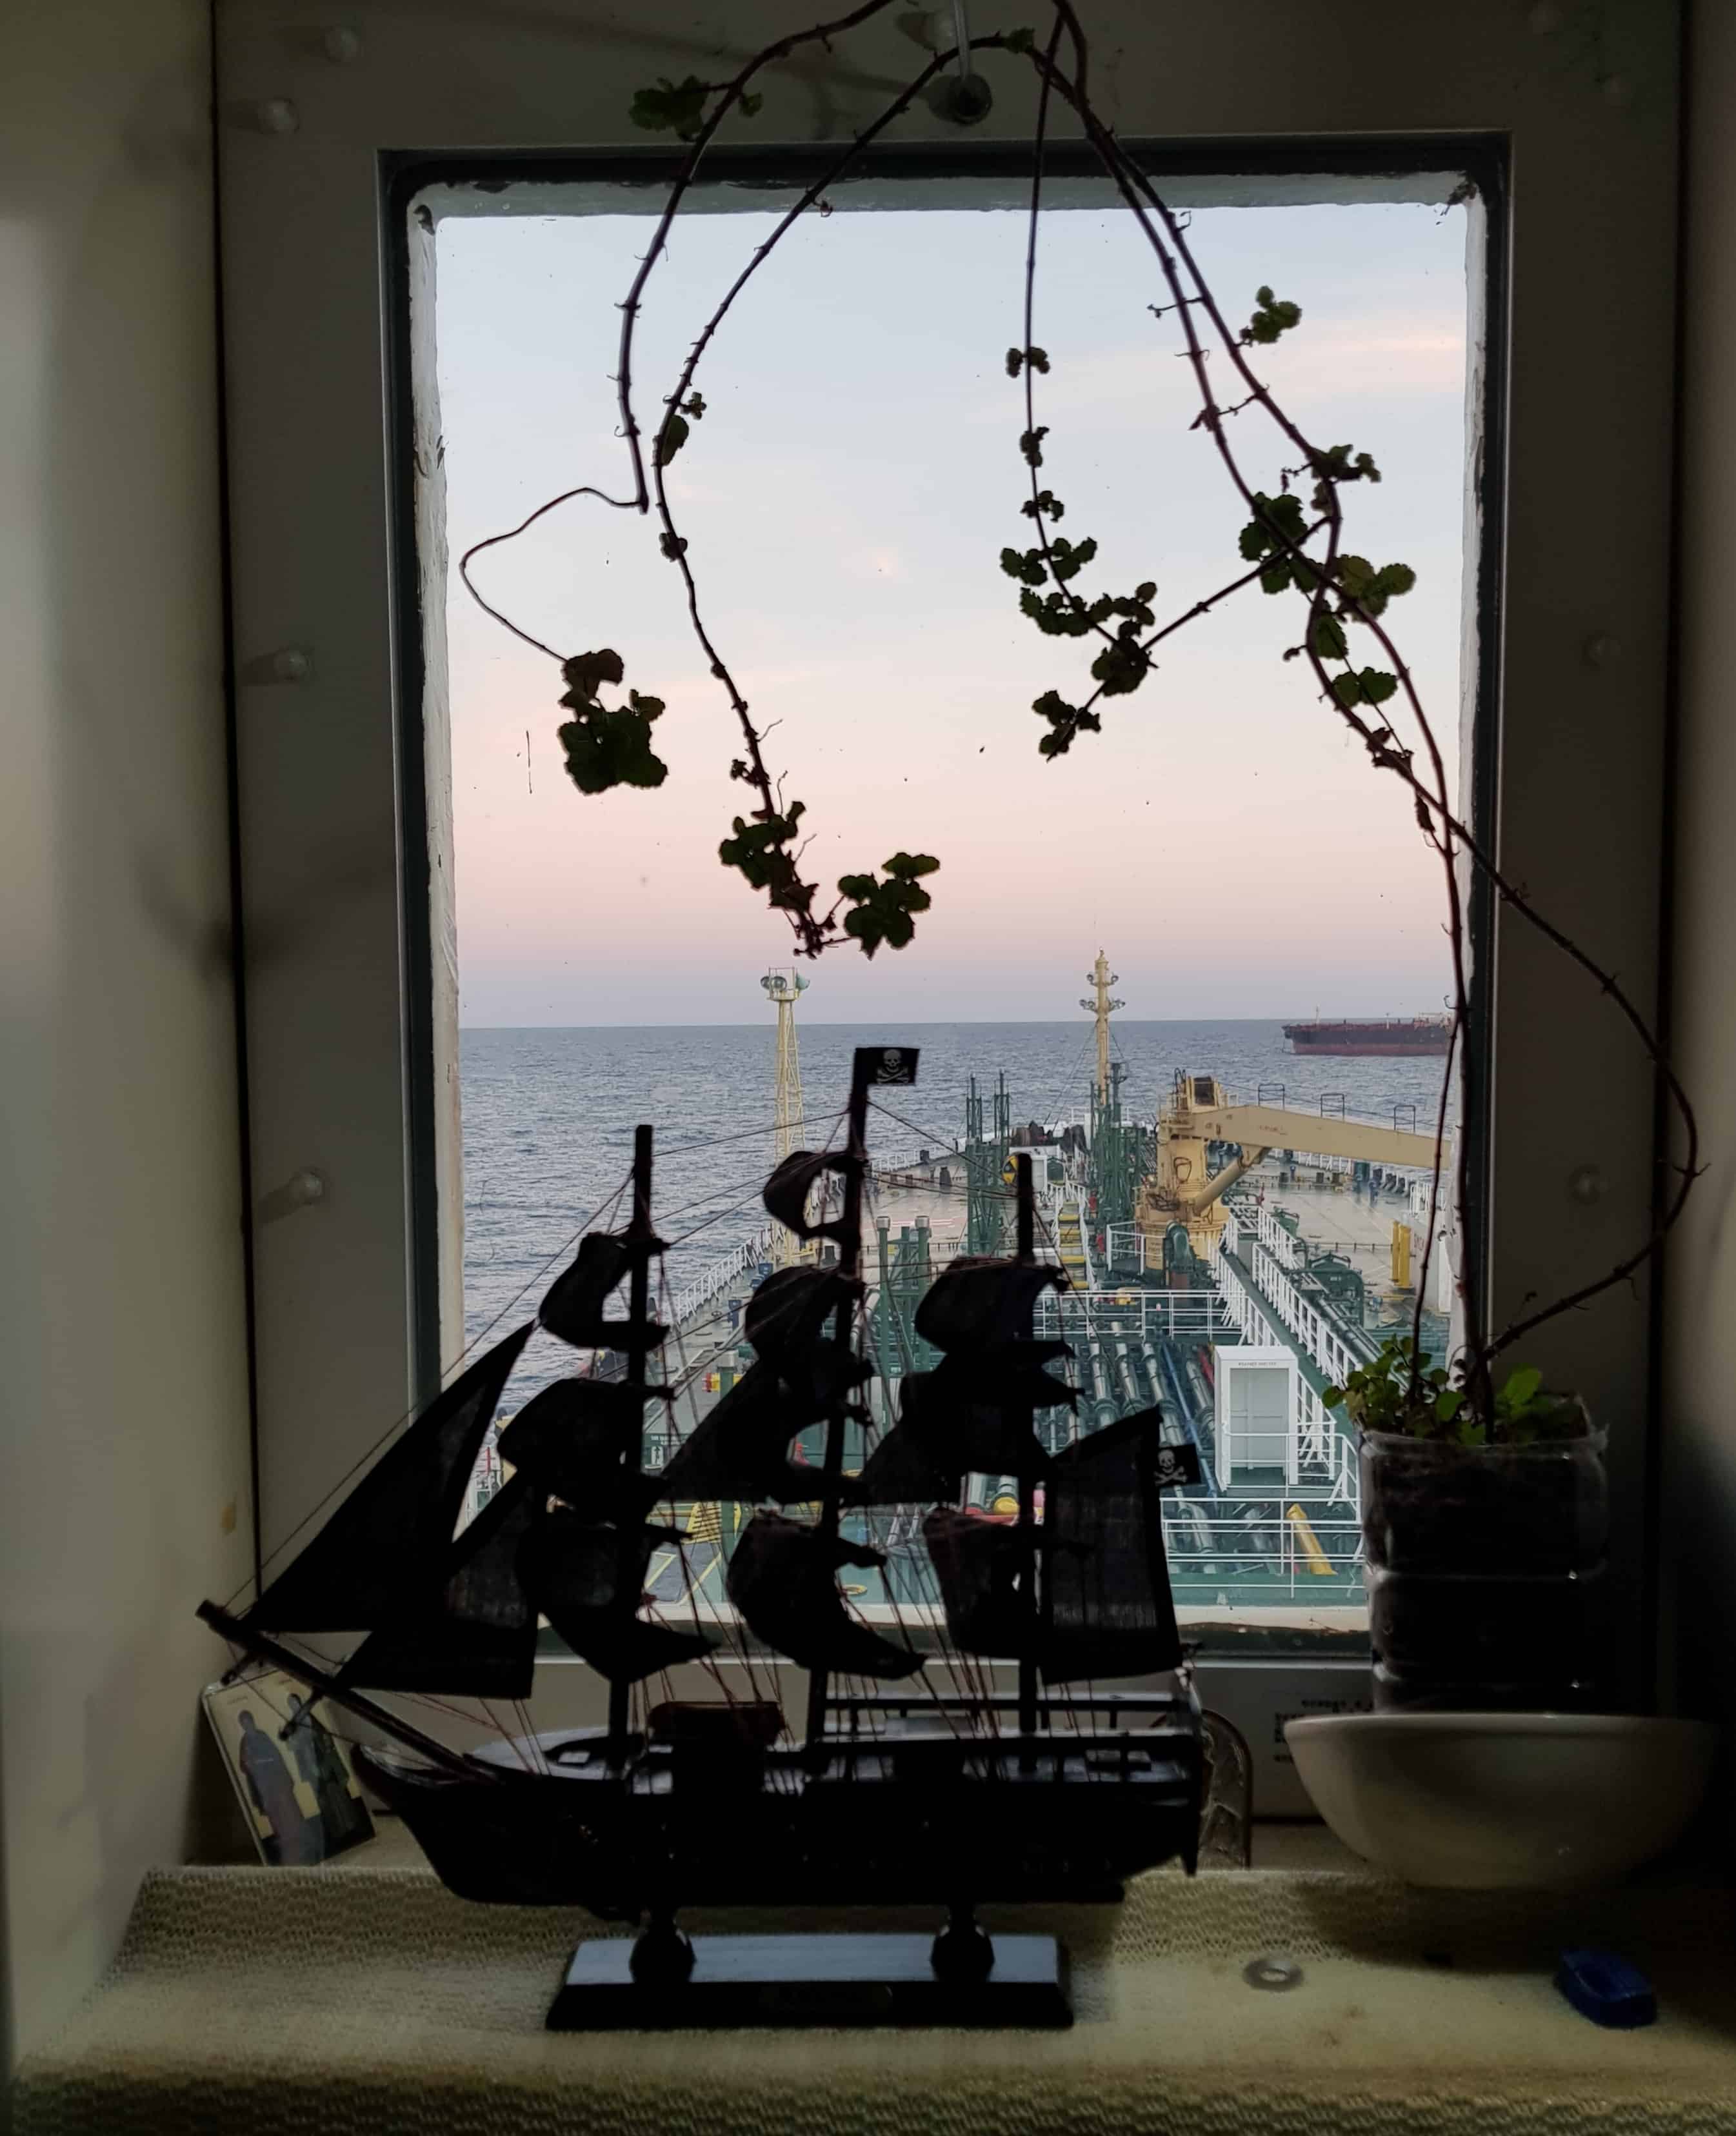 2. Seaman's window. Credits to Dimitris Papadakis